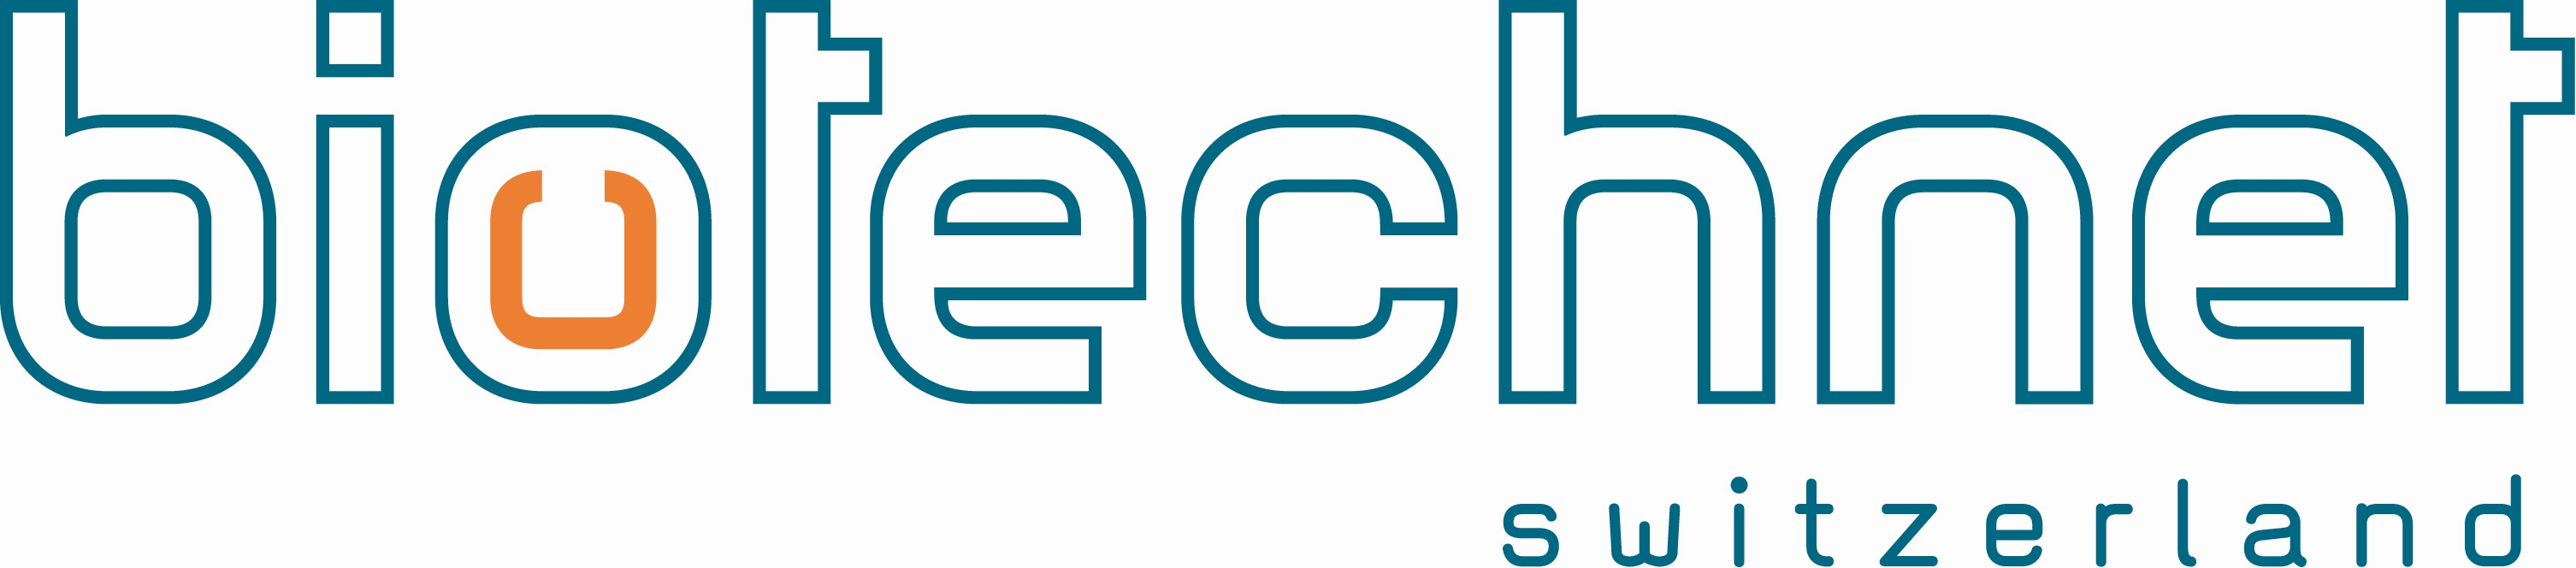 Biotechnet Switzerland Logo